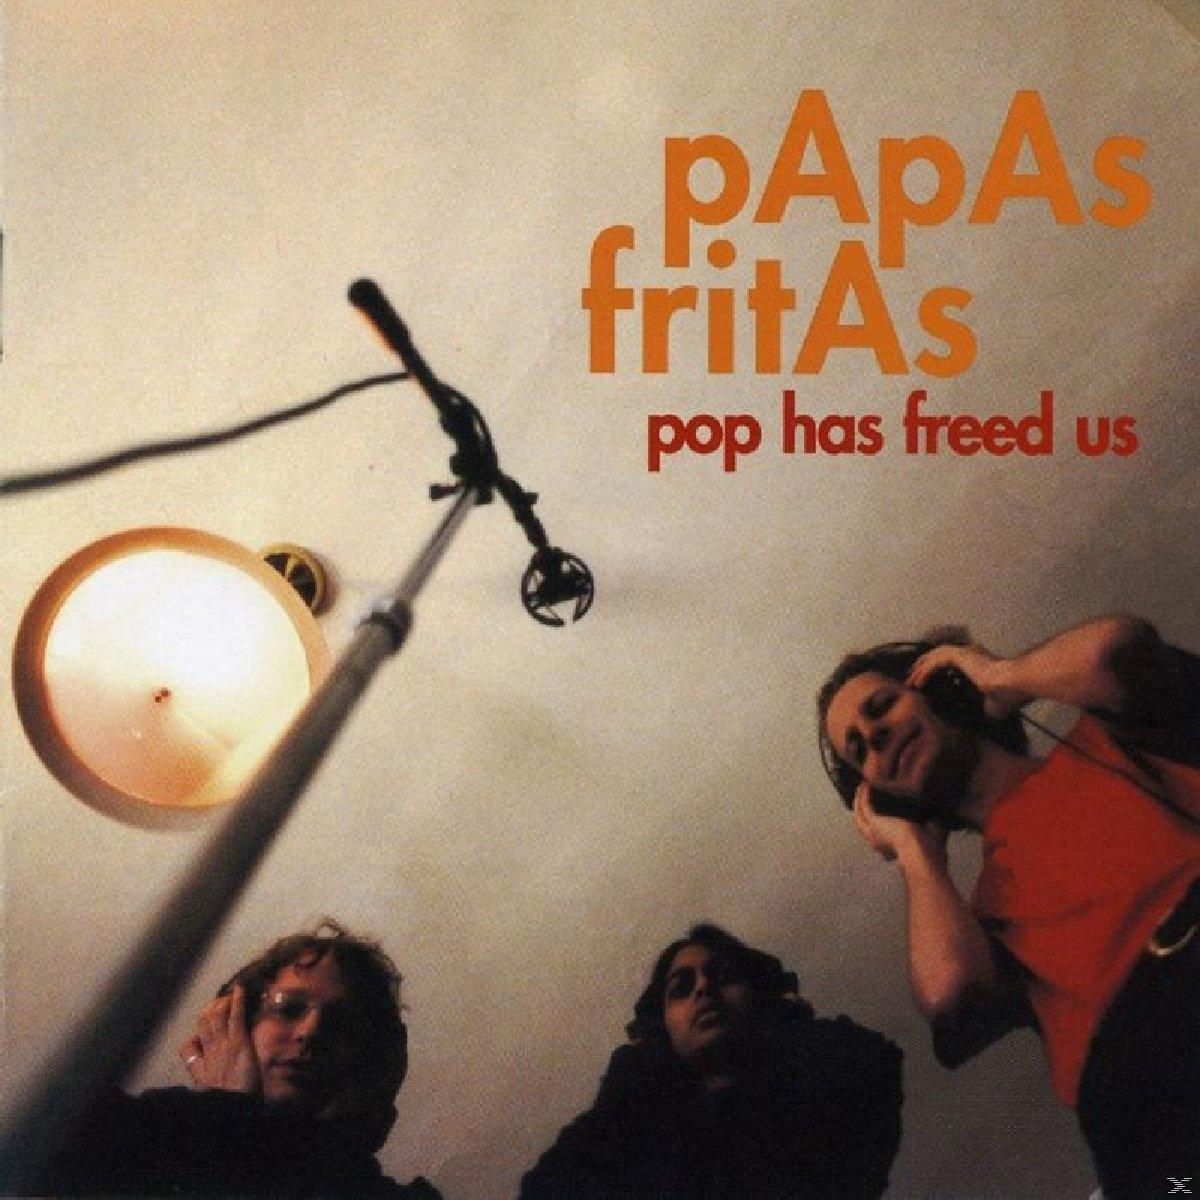 Papas Fritas - Pop Freed Us Has (CD) 